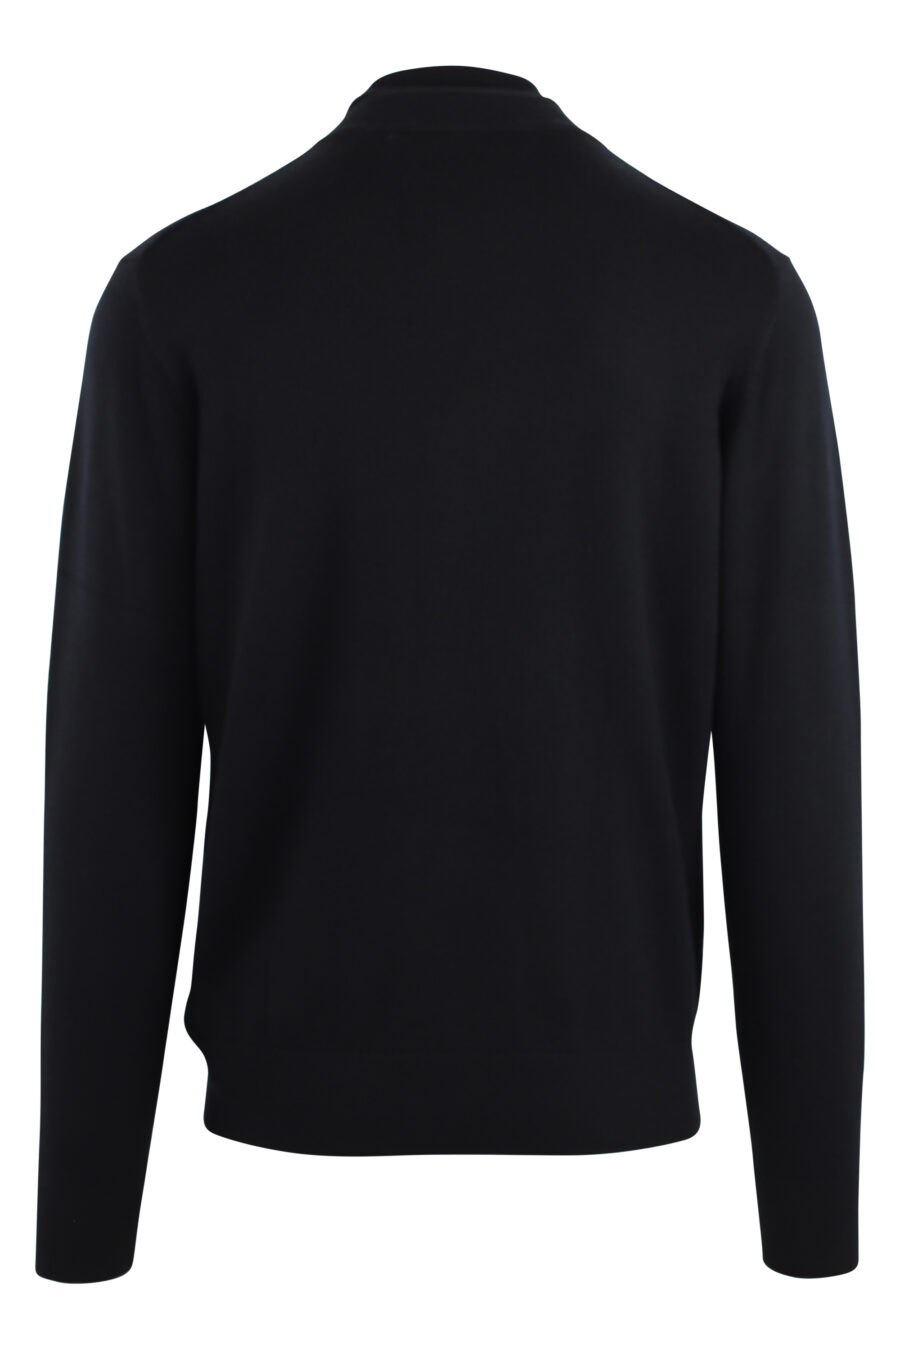 Black turtleneck jumper with logo on collar - IMG 7554